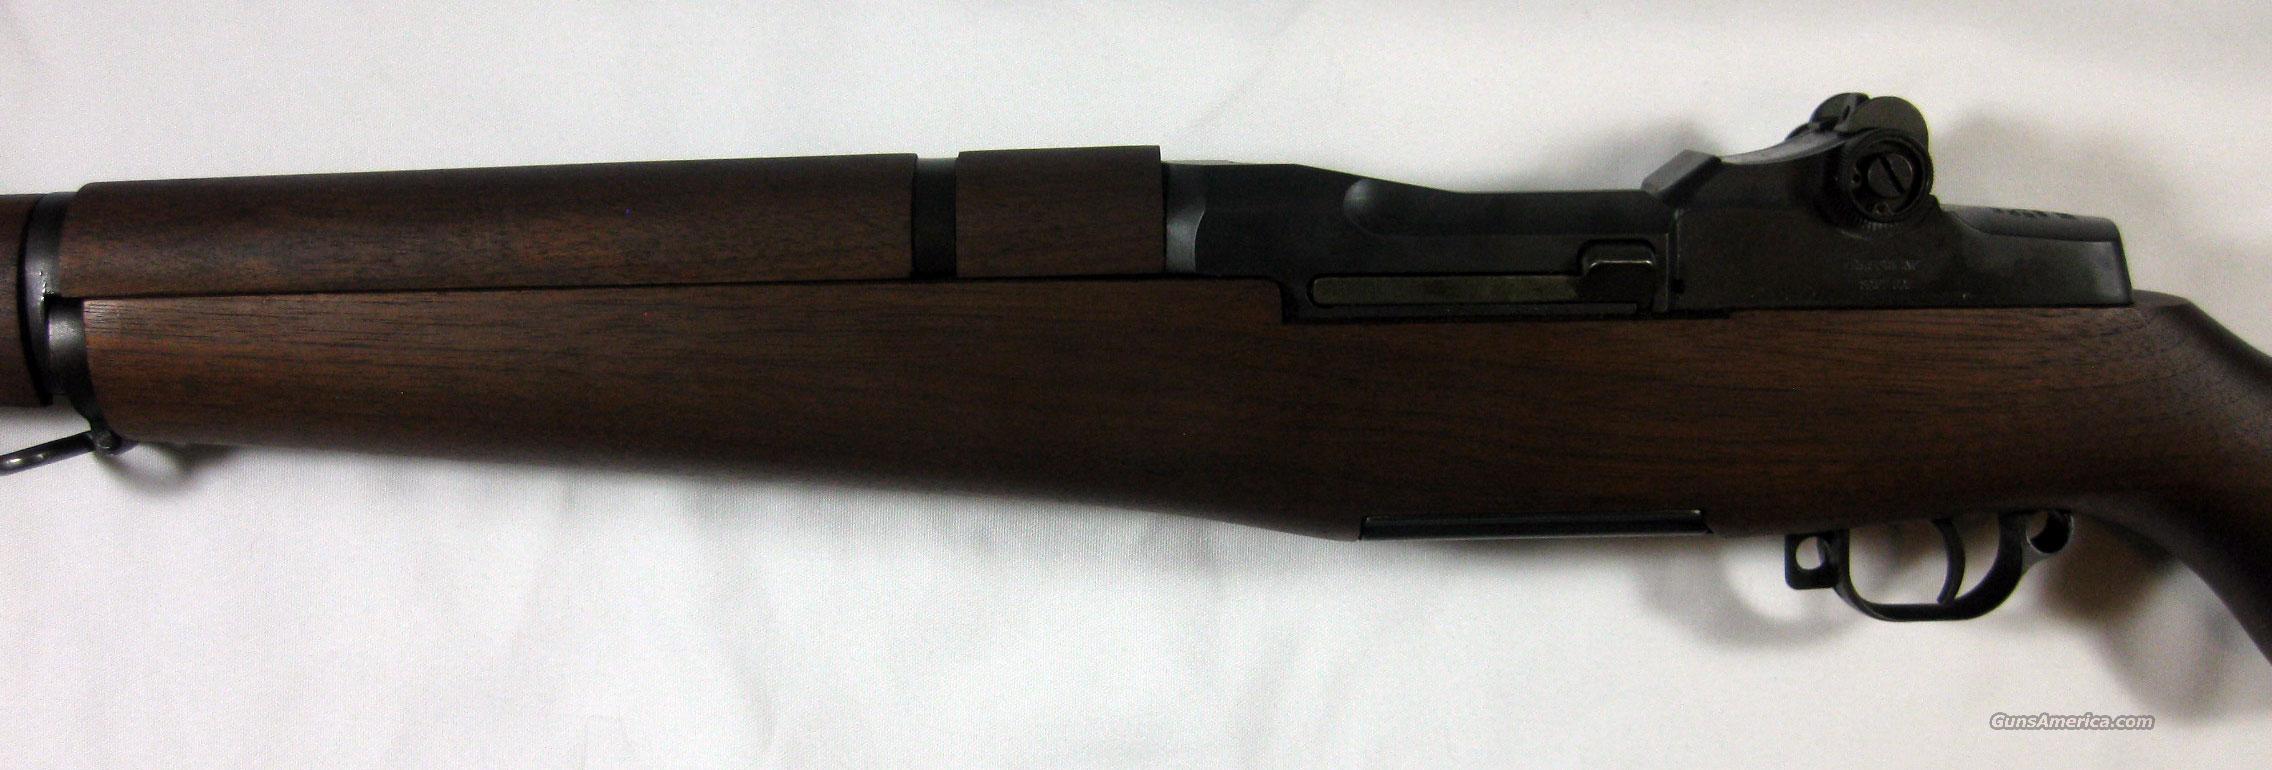 ADI Lithgow Australian M1 Garand 30... for sale at Gunsamerica.com ...